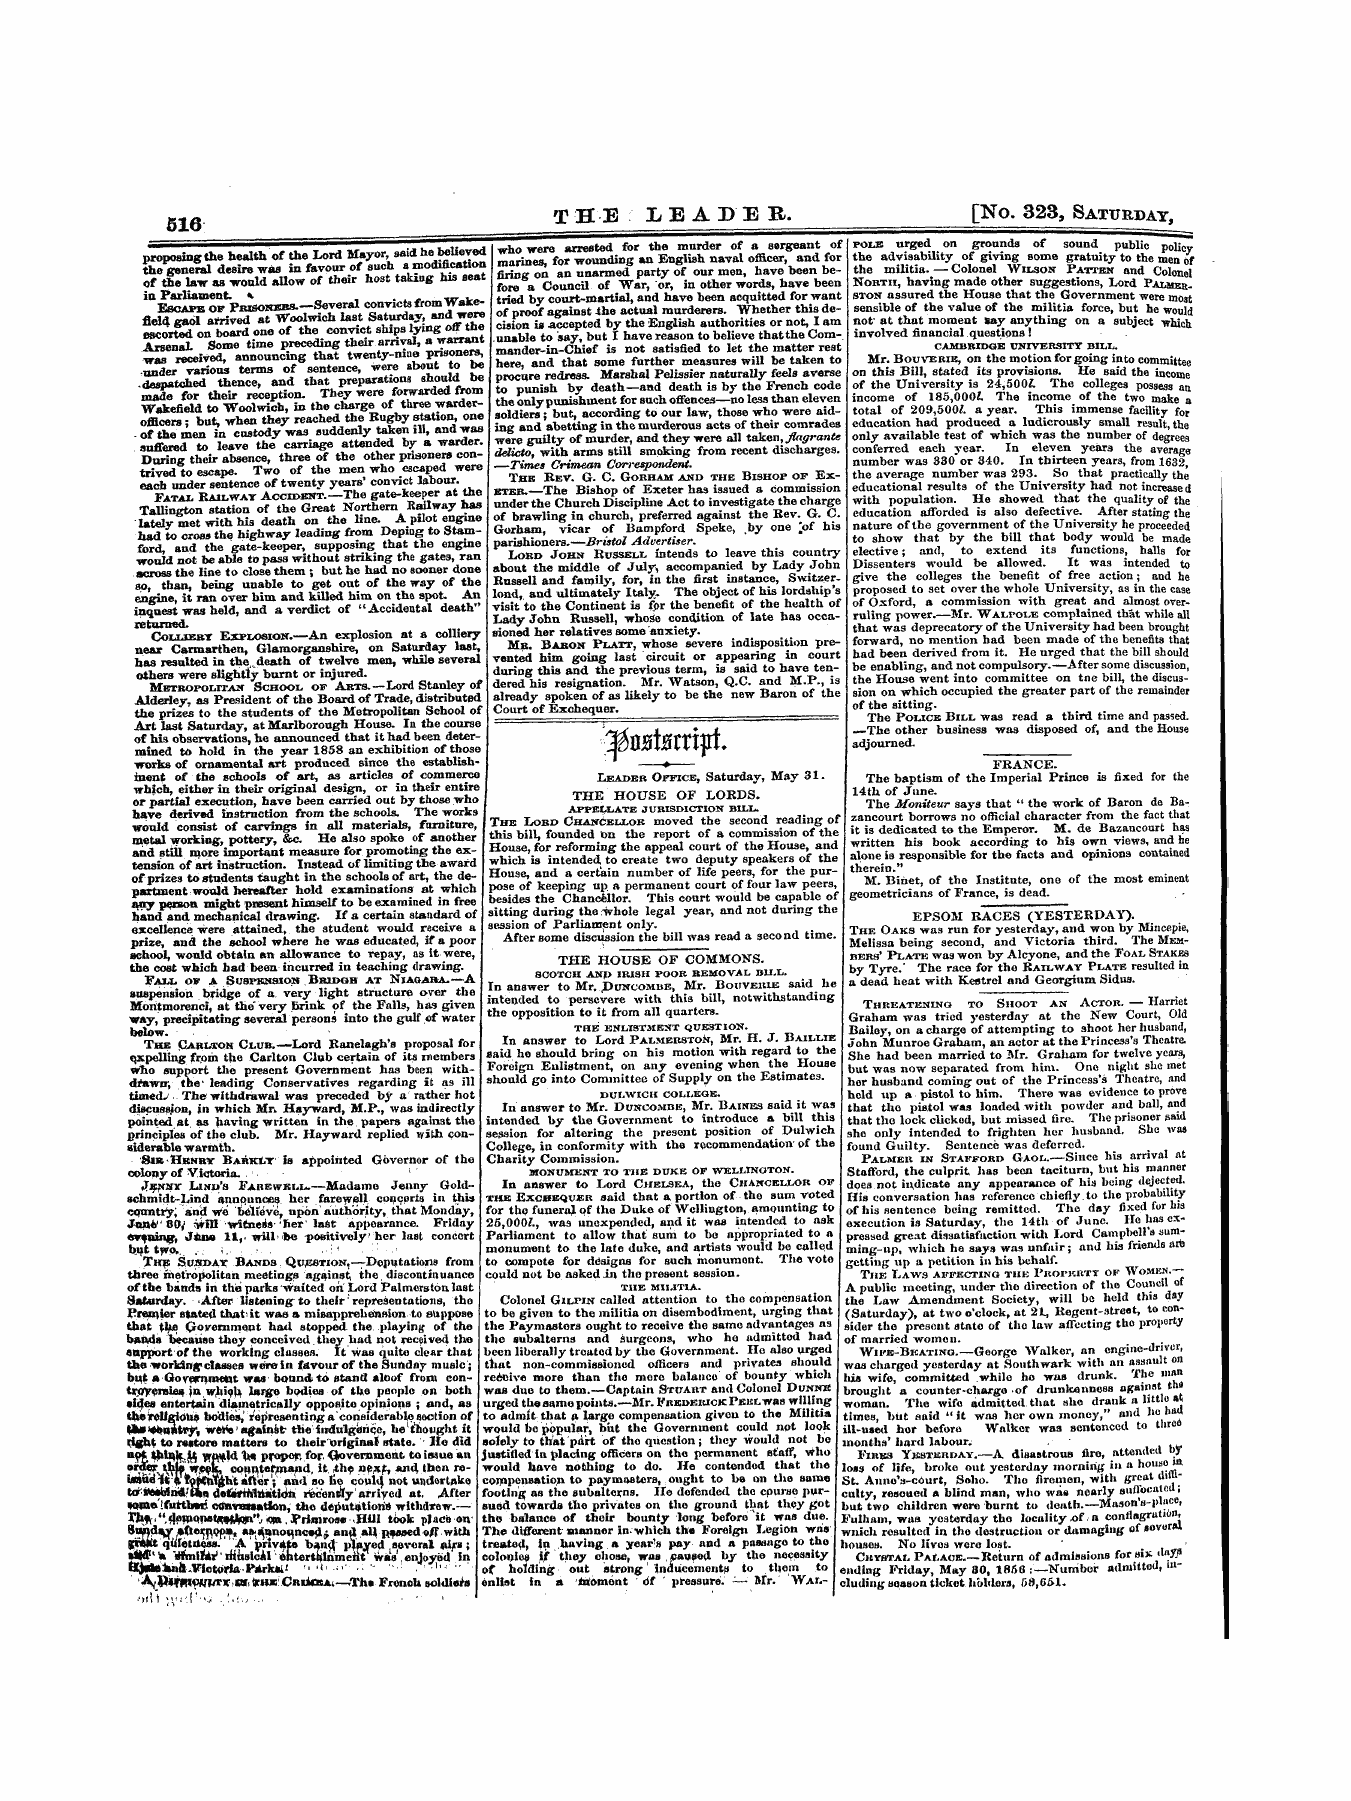 Leader (1850-1860): jS F Y, 1st edition - , ^Nwtwfftltt Jkuuhflu 4|U * ' »